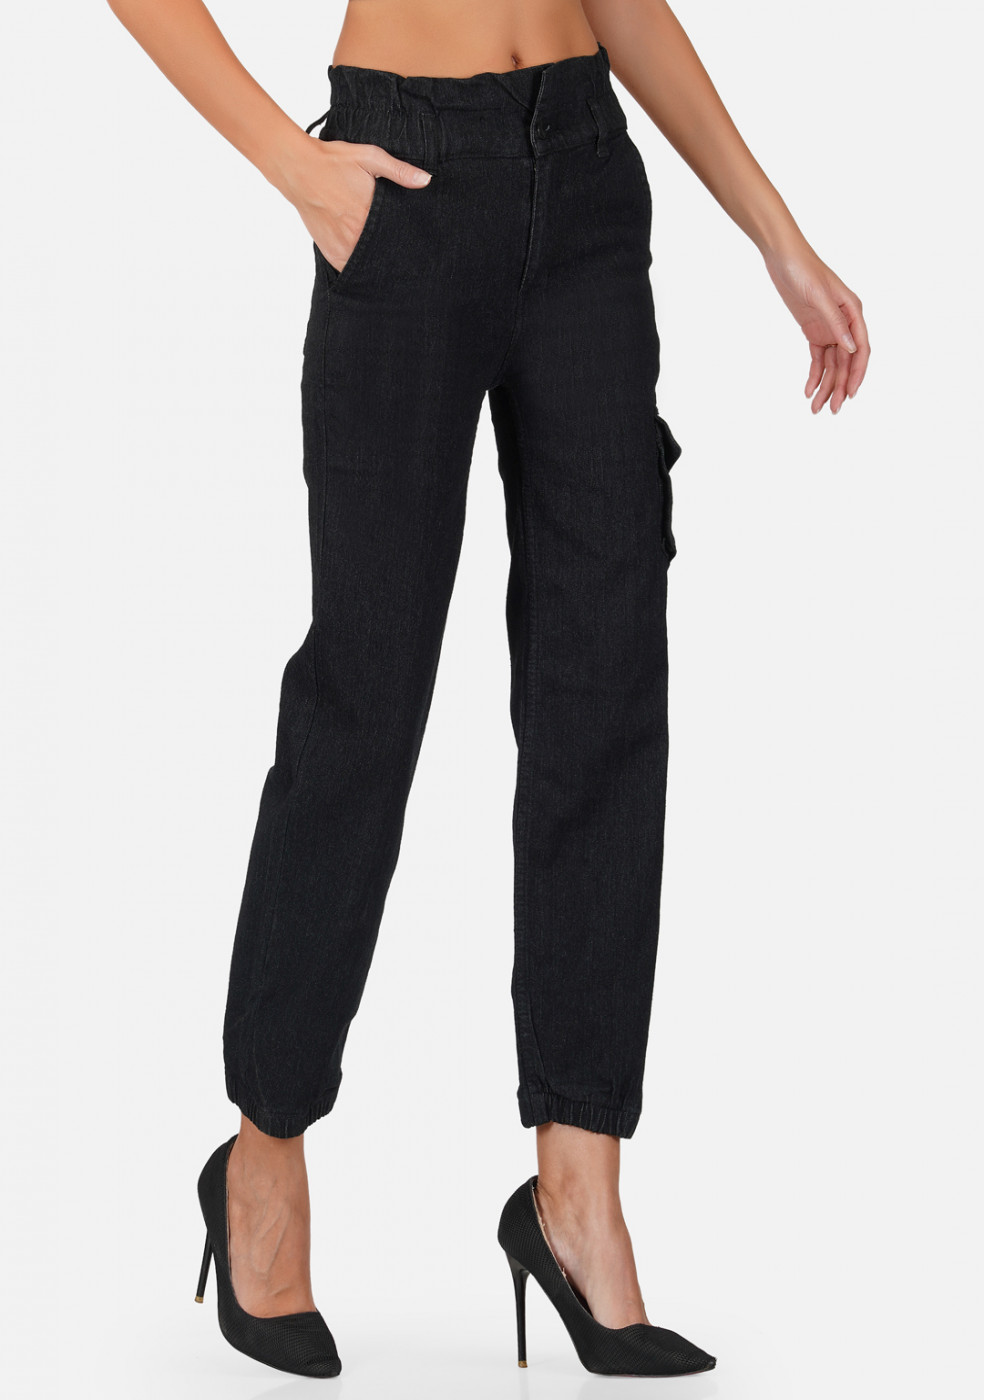 Stretchable Cotton Black Jeans For Women